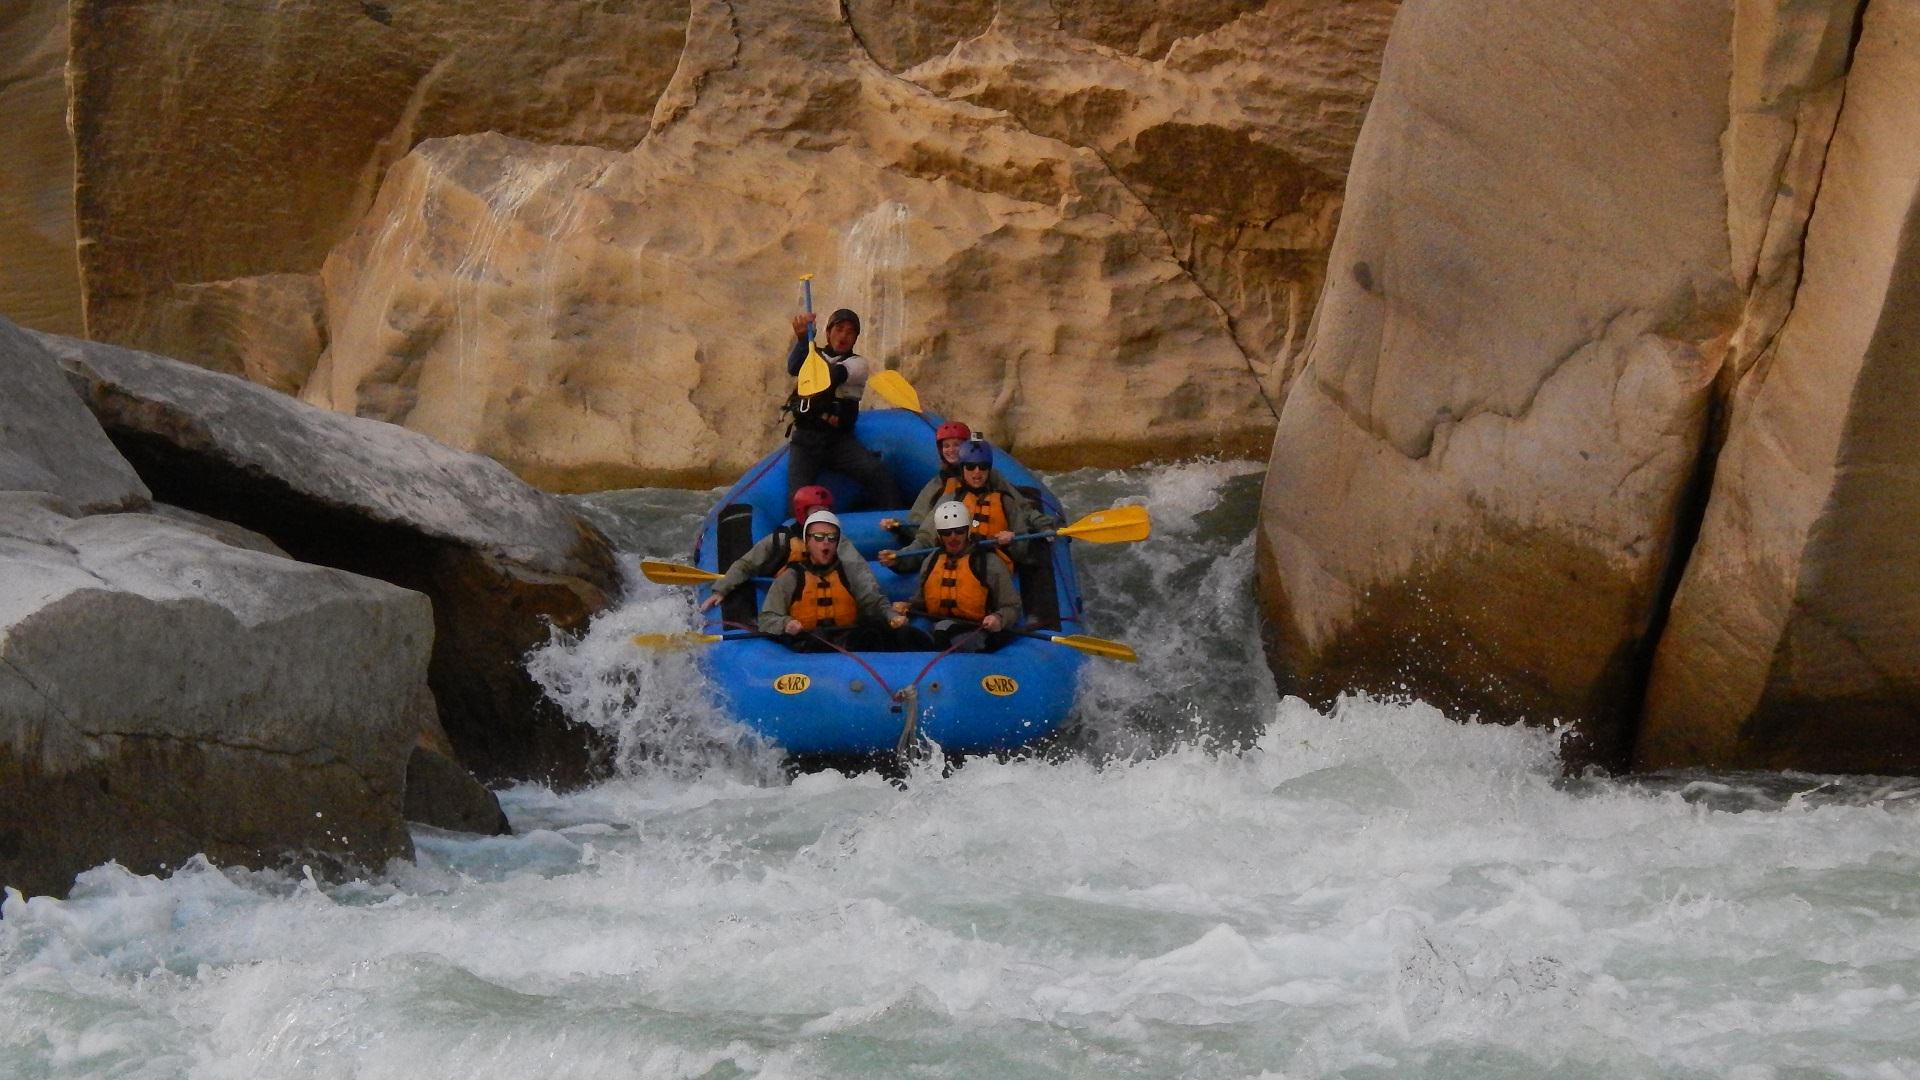 River Rafting in the Apurimac river